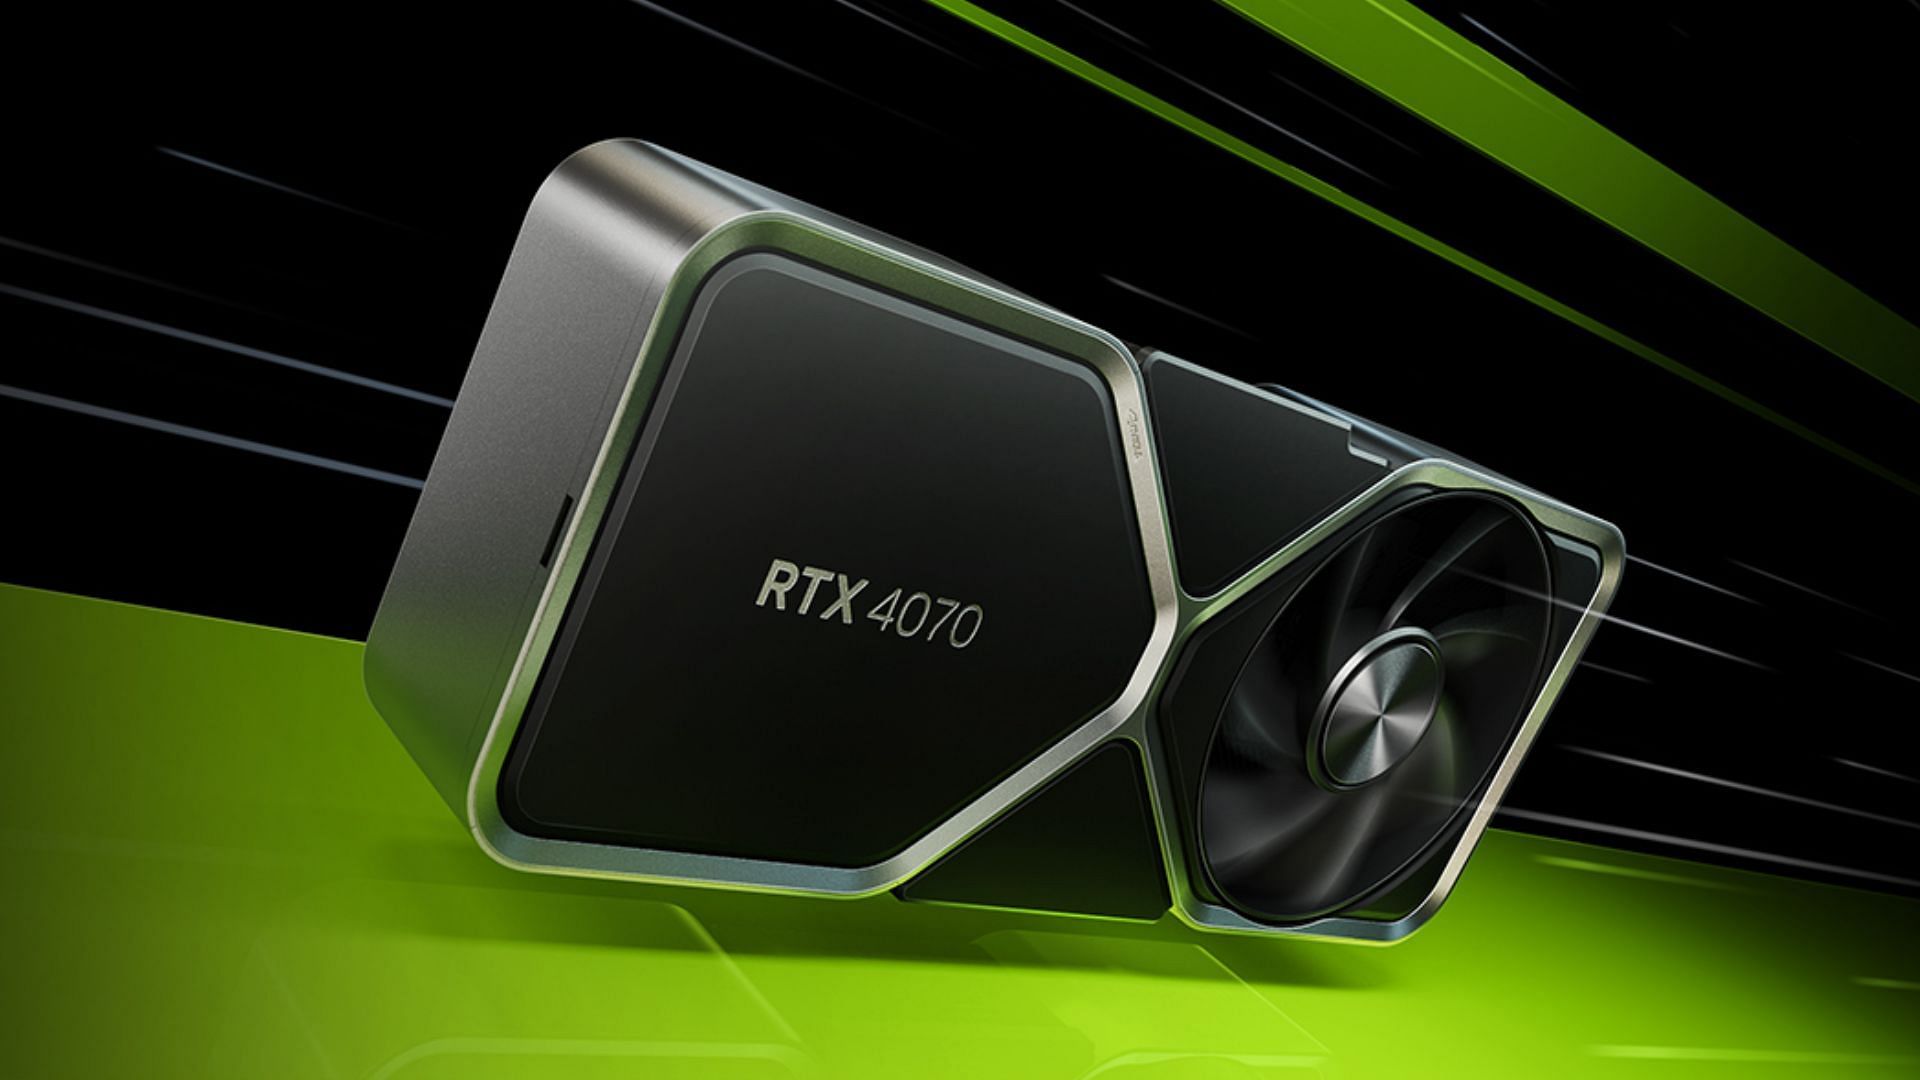 The Nvidia RTX 4070 is a powerful GPU for 1440p gaming (Image via Nvidia)